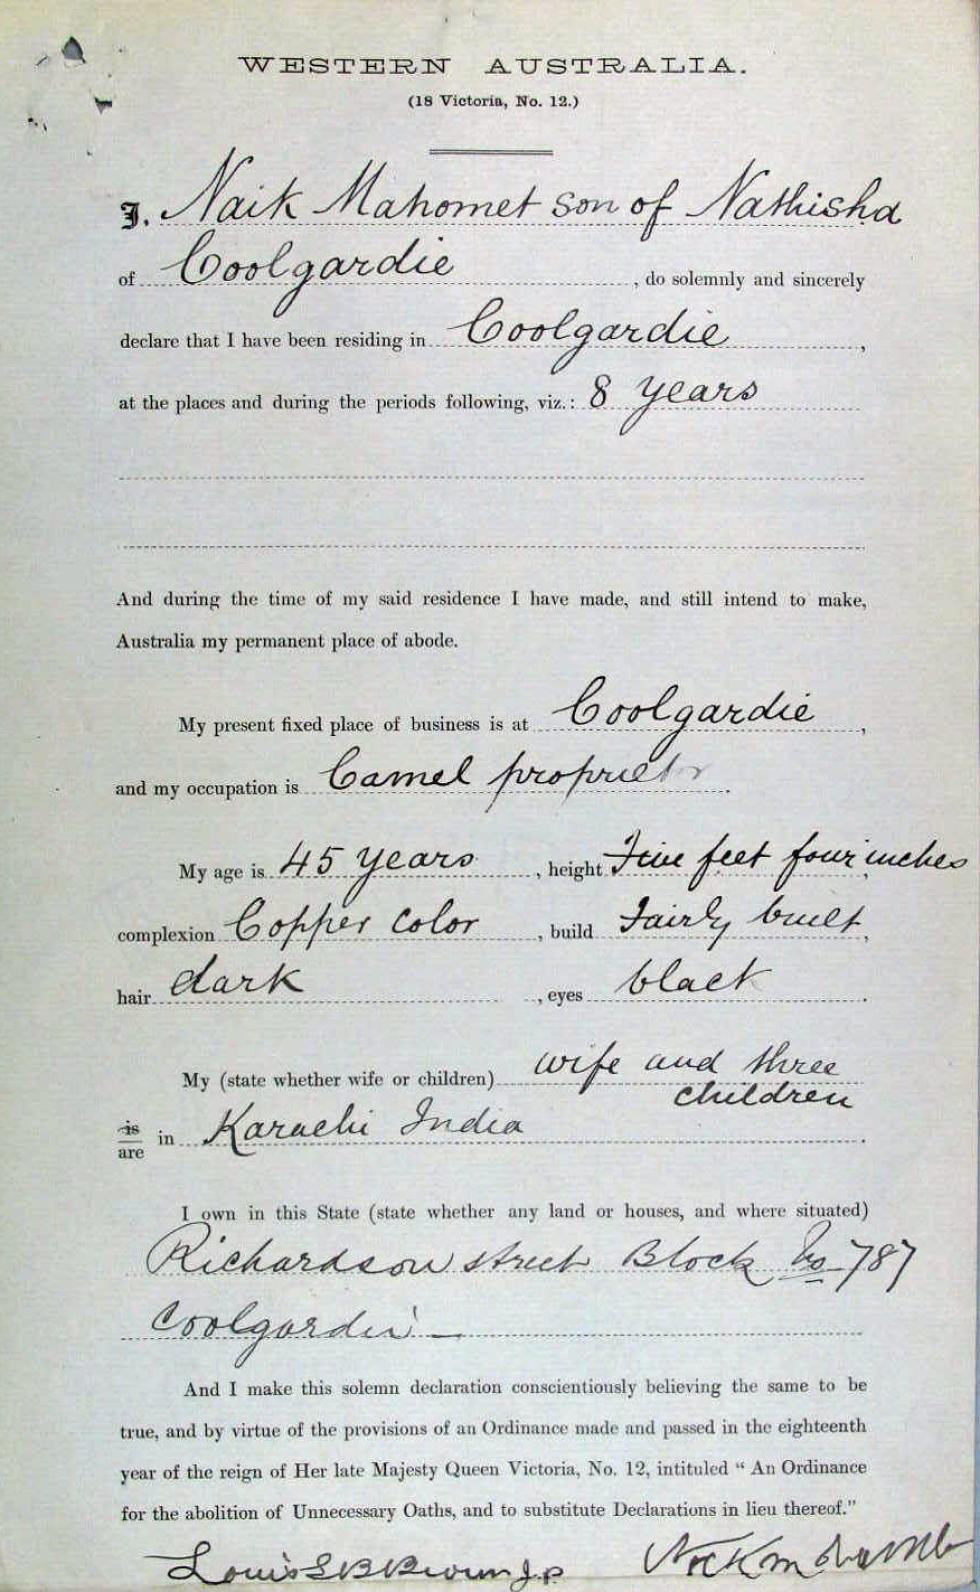 Western Australia Statutory Declaration form completed by Naik Mahomet son of Nathisha.